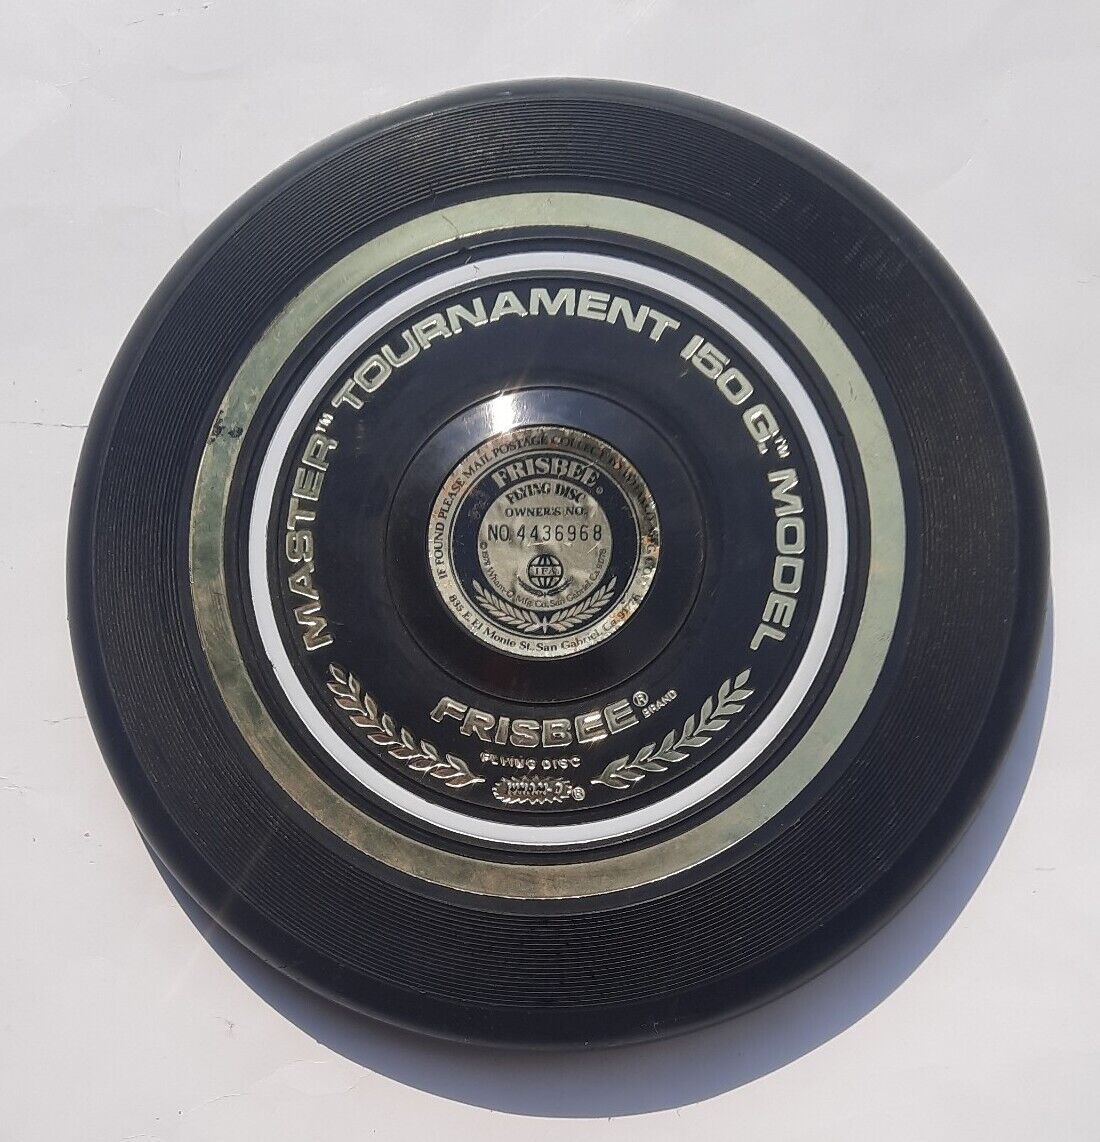 Vtg 1979 Wham-o Frisbee Disc Master Tournament 150g Black Gold No. 4436968